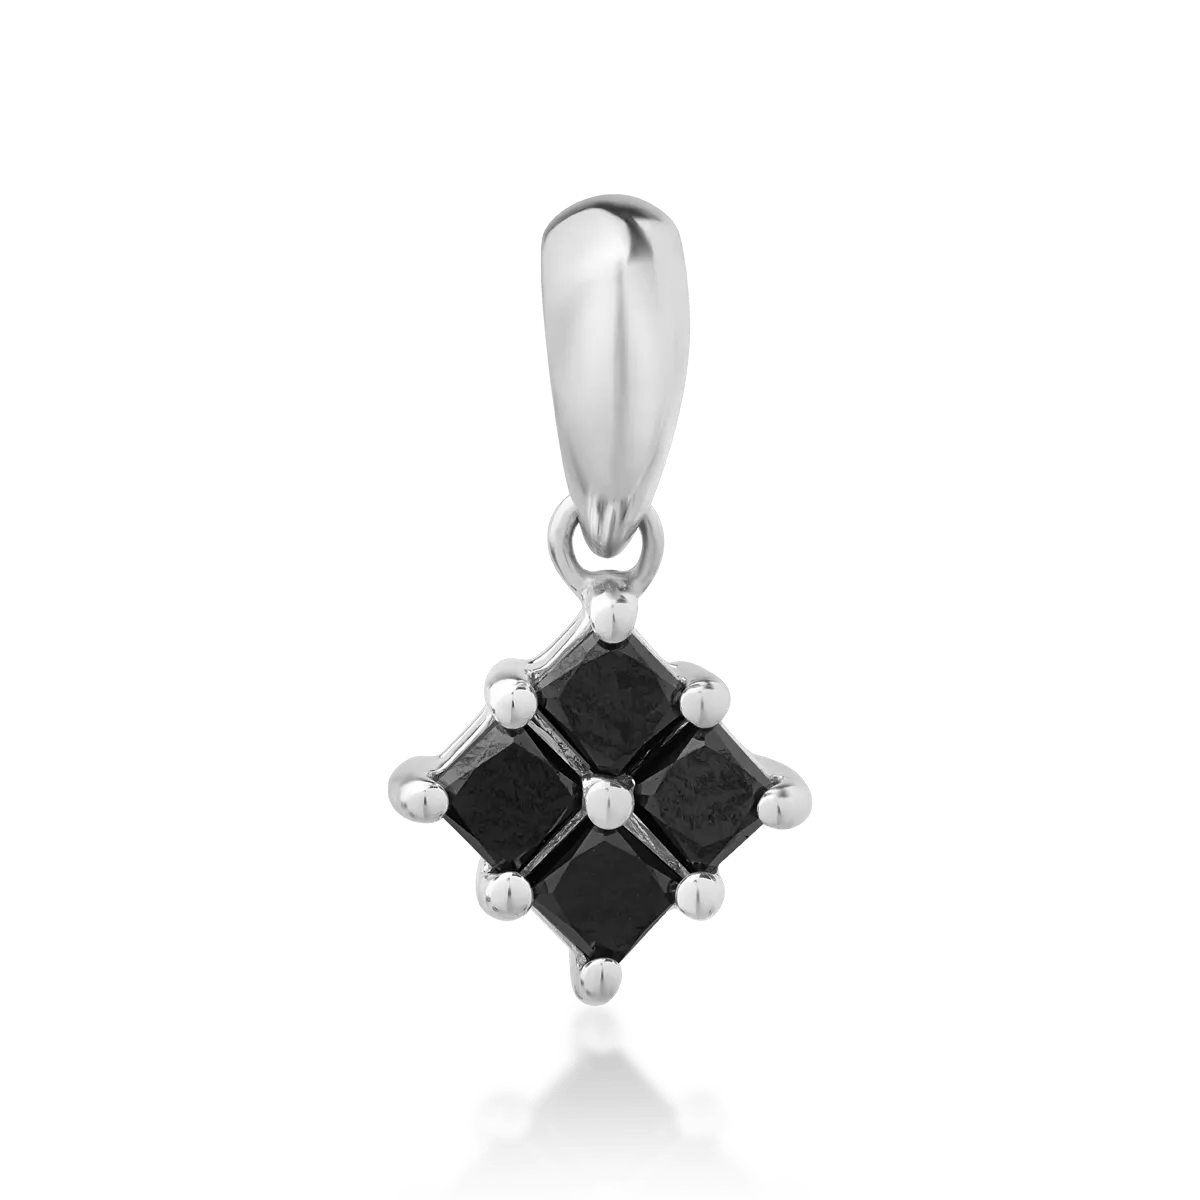 14K white gold pendant with black diamonds of 0.405ct